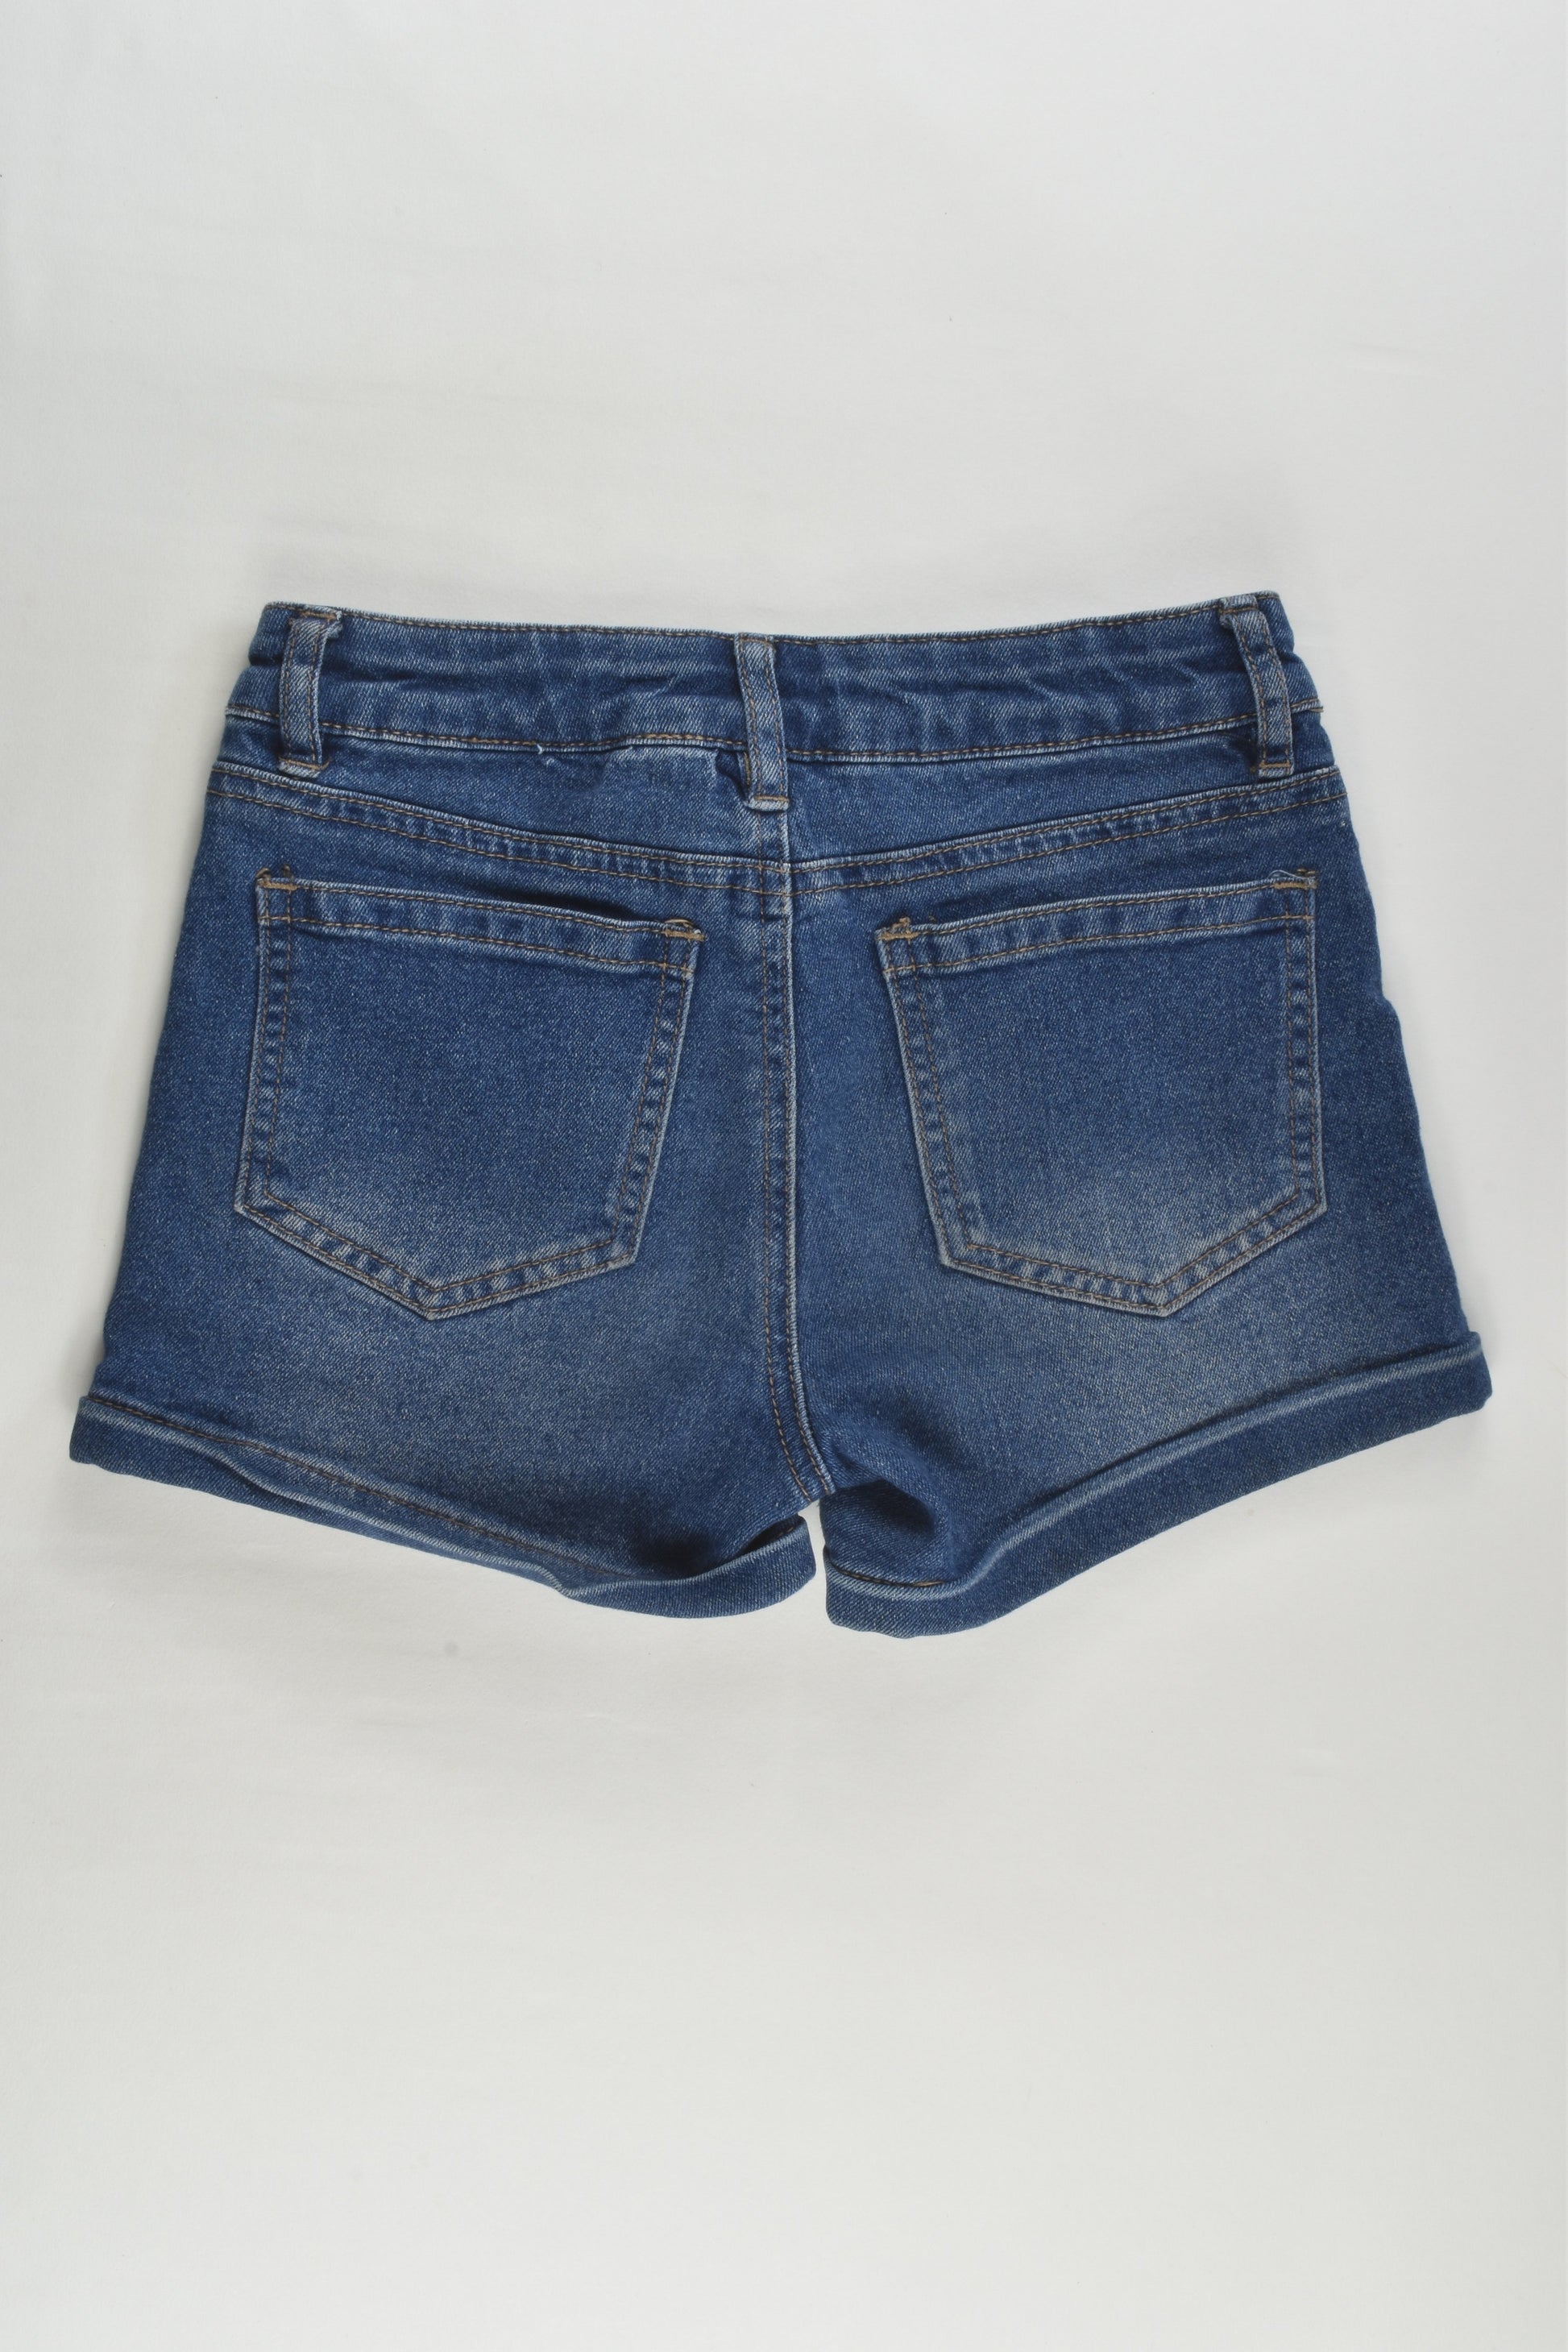 Clothing & Co Size 9 Stertchy Denim Shorts